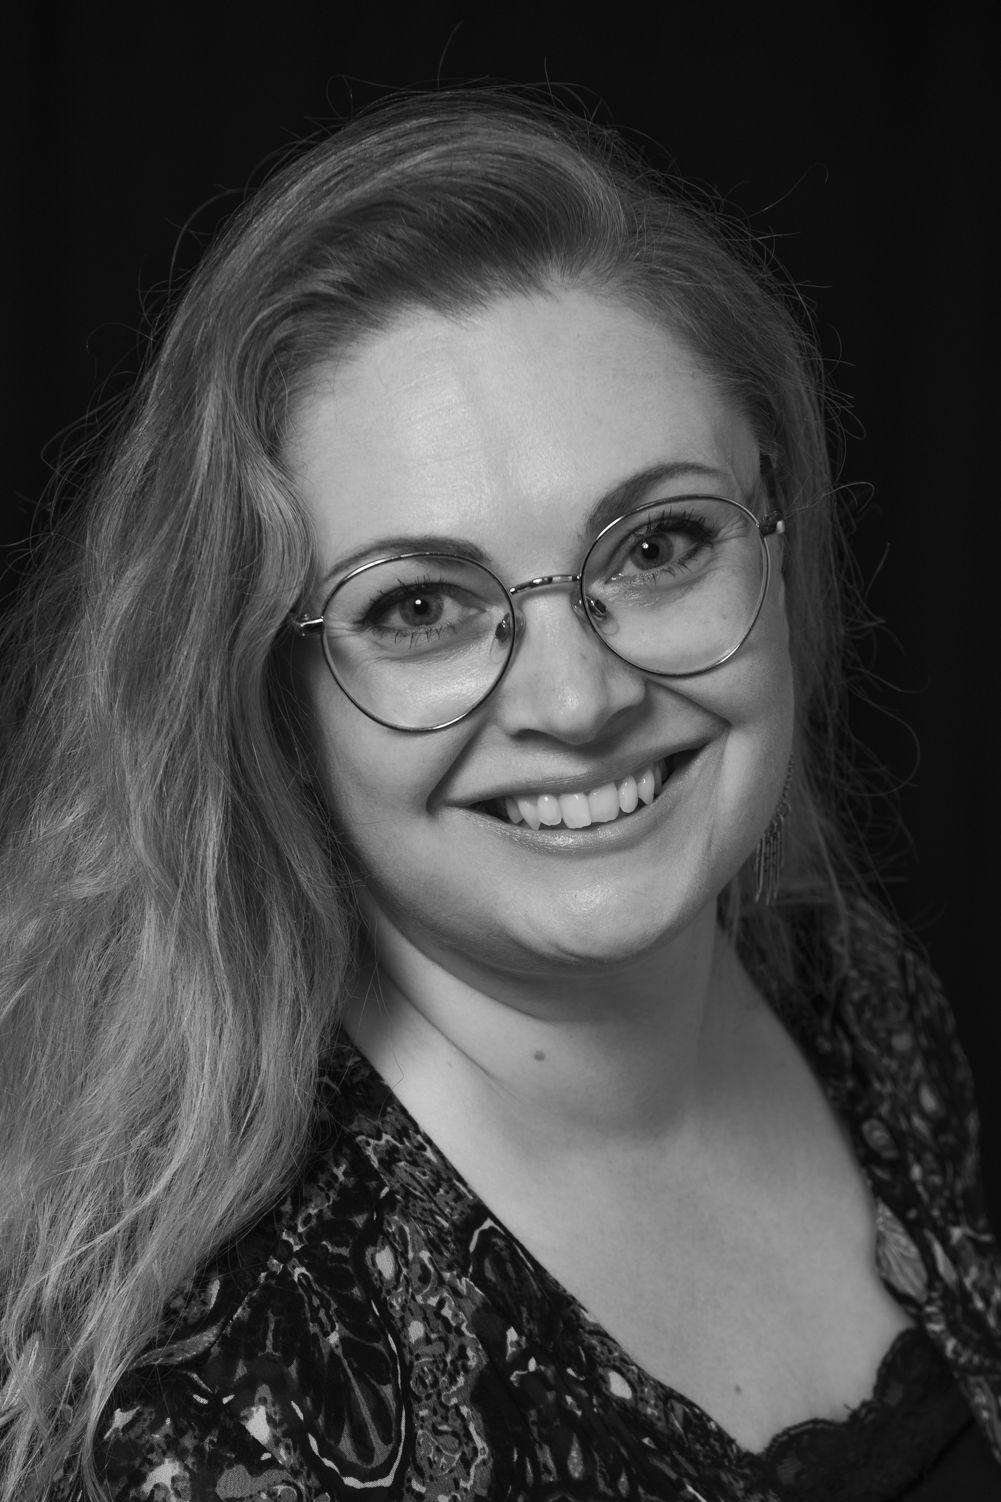 A black and white picture of Susanna Saarenpää smiling.